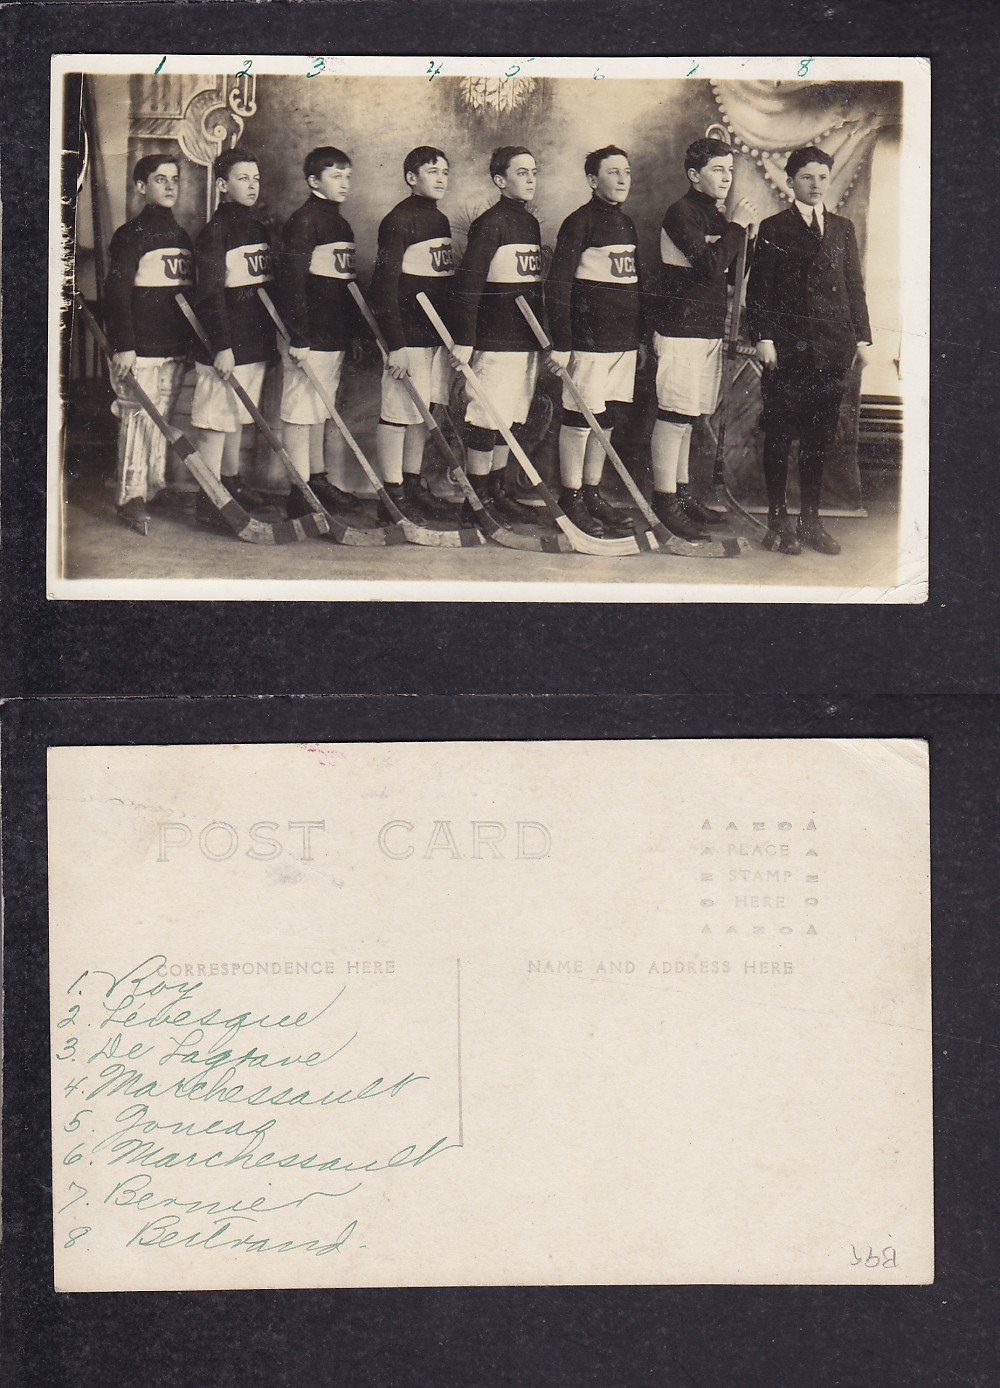 1900'S VICTORIAVILLE HOCKEY TEAM POST CARD photo